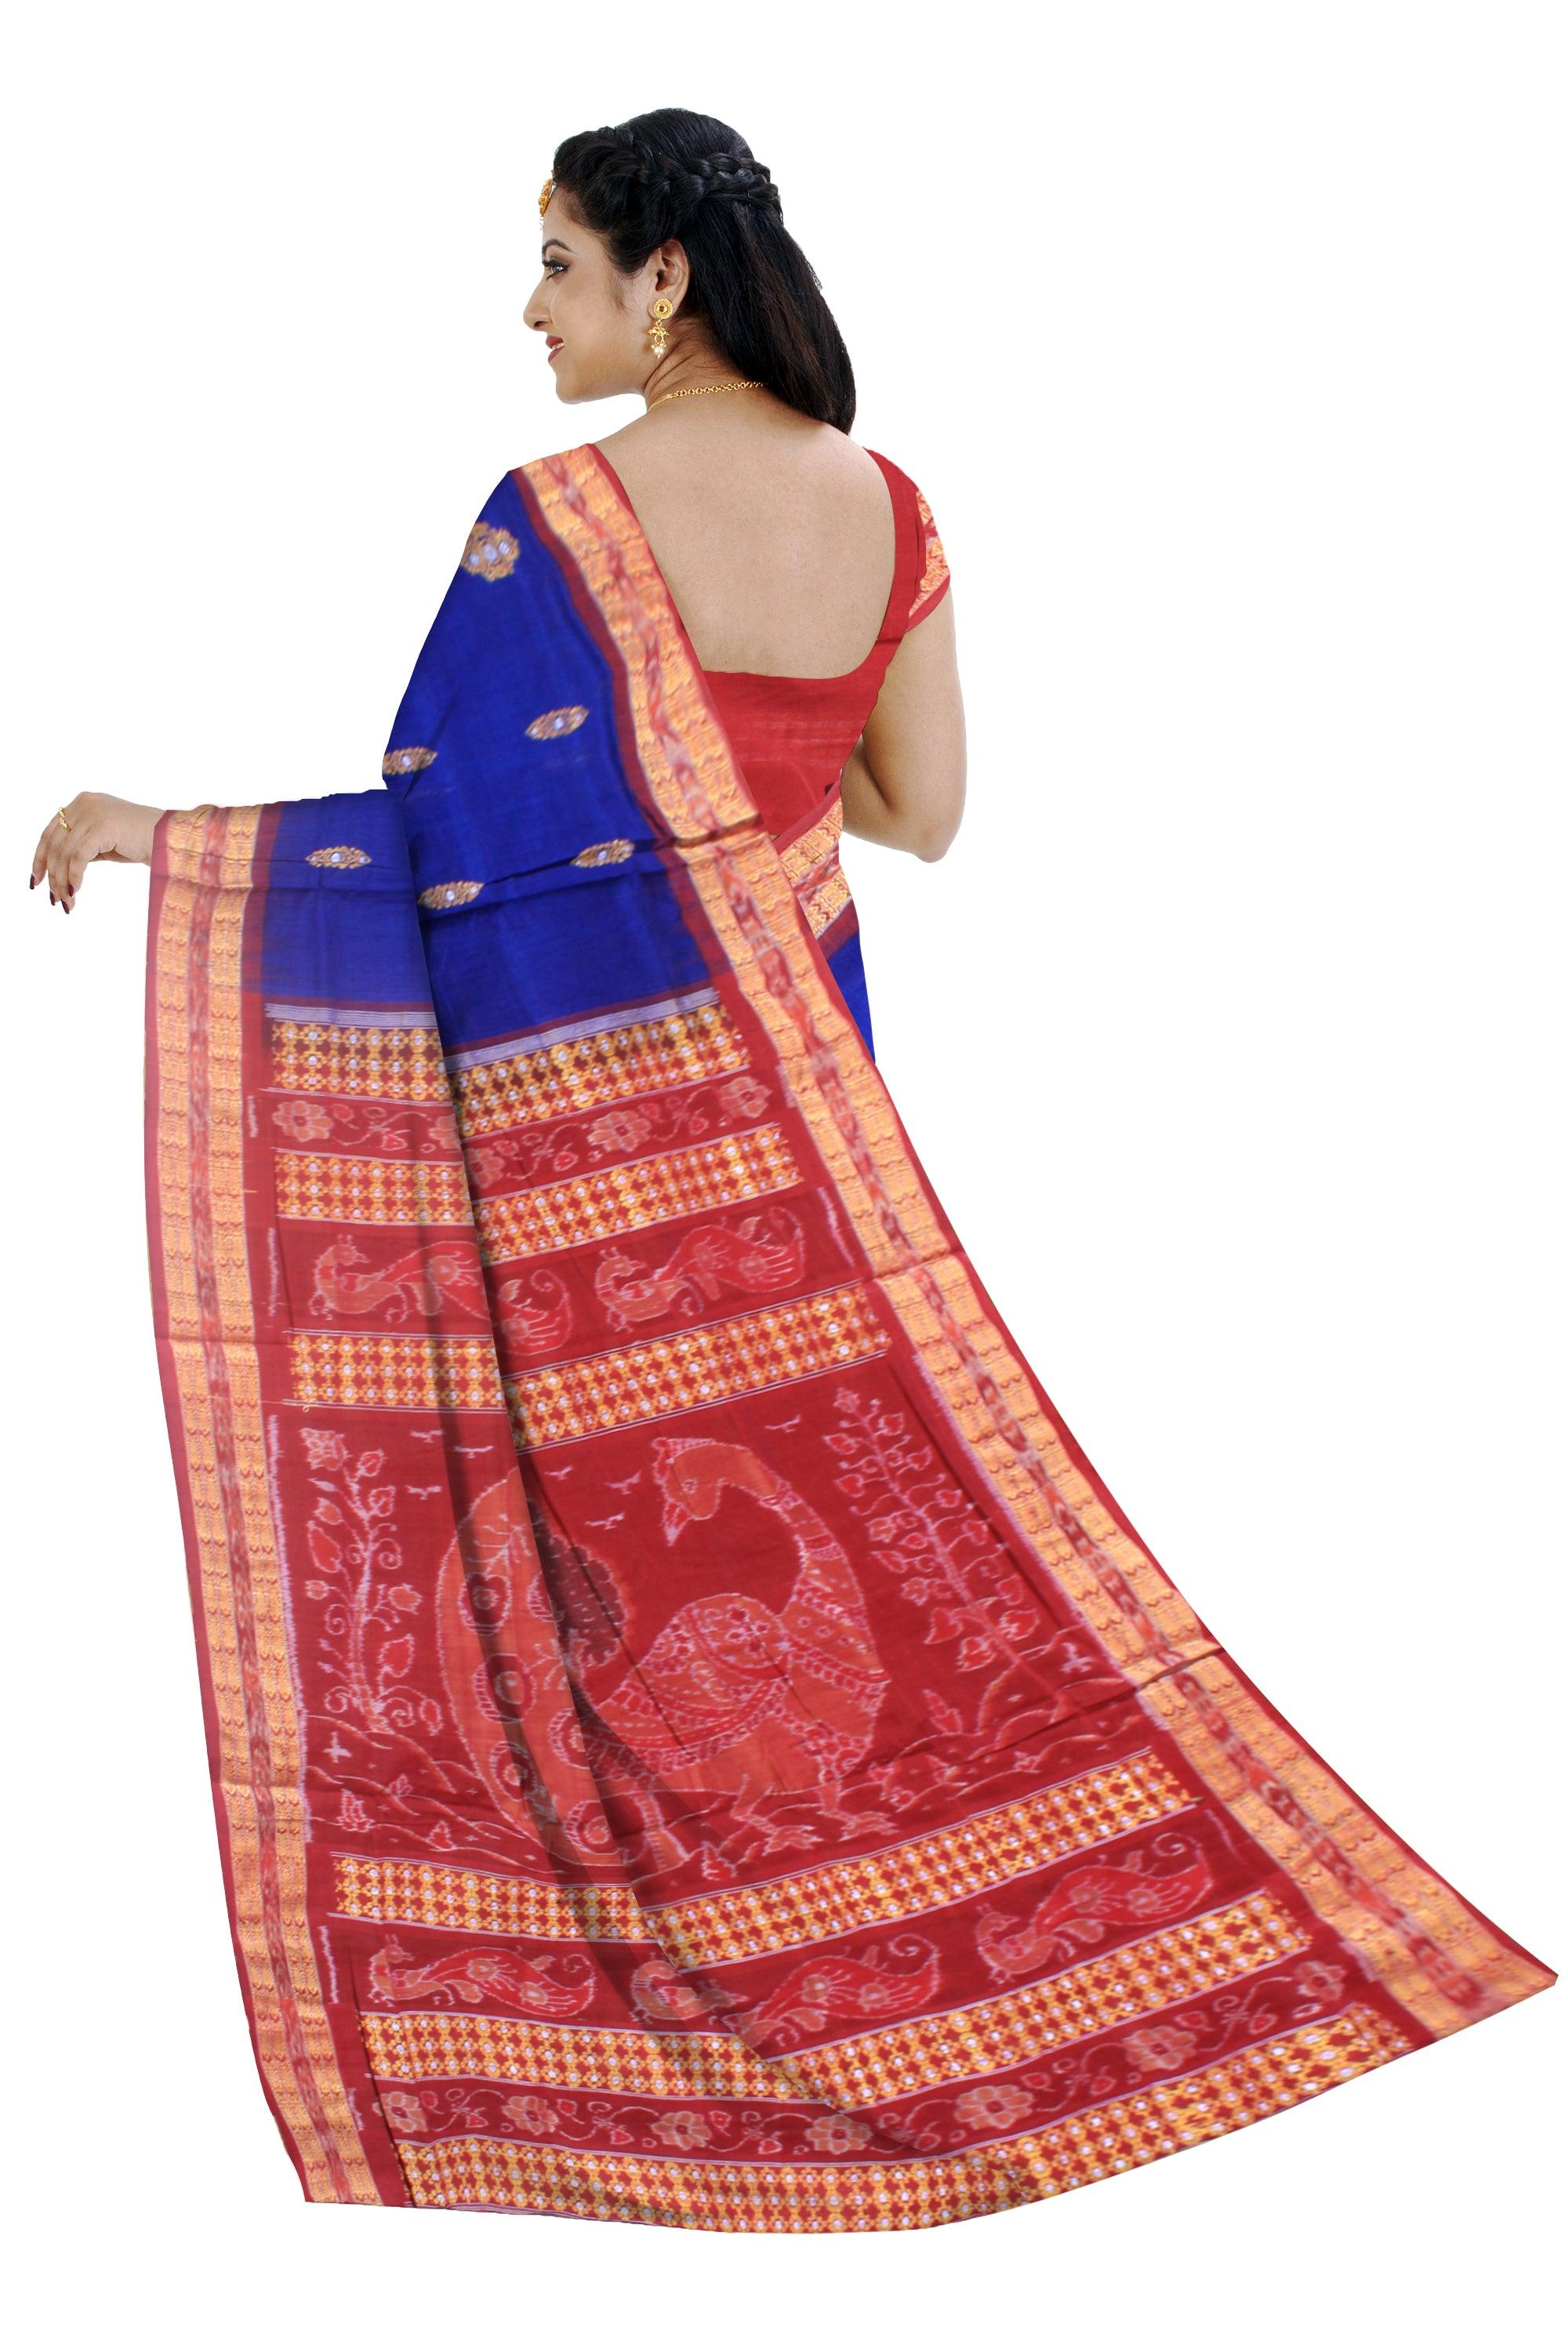 Bandha design of Samblpuri cotton  saree in blue and maroon color, with blouse piece. - Koshali Arts & Crafts Enterprise